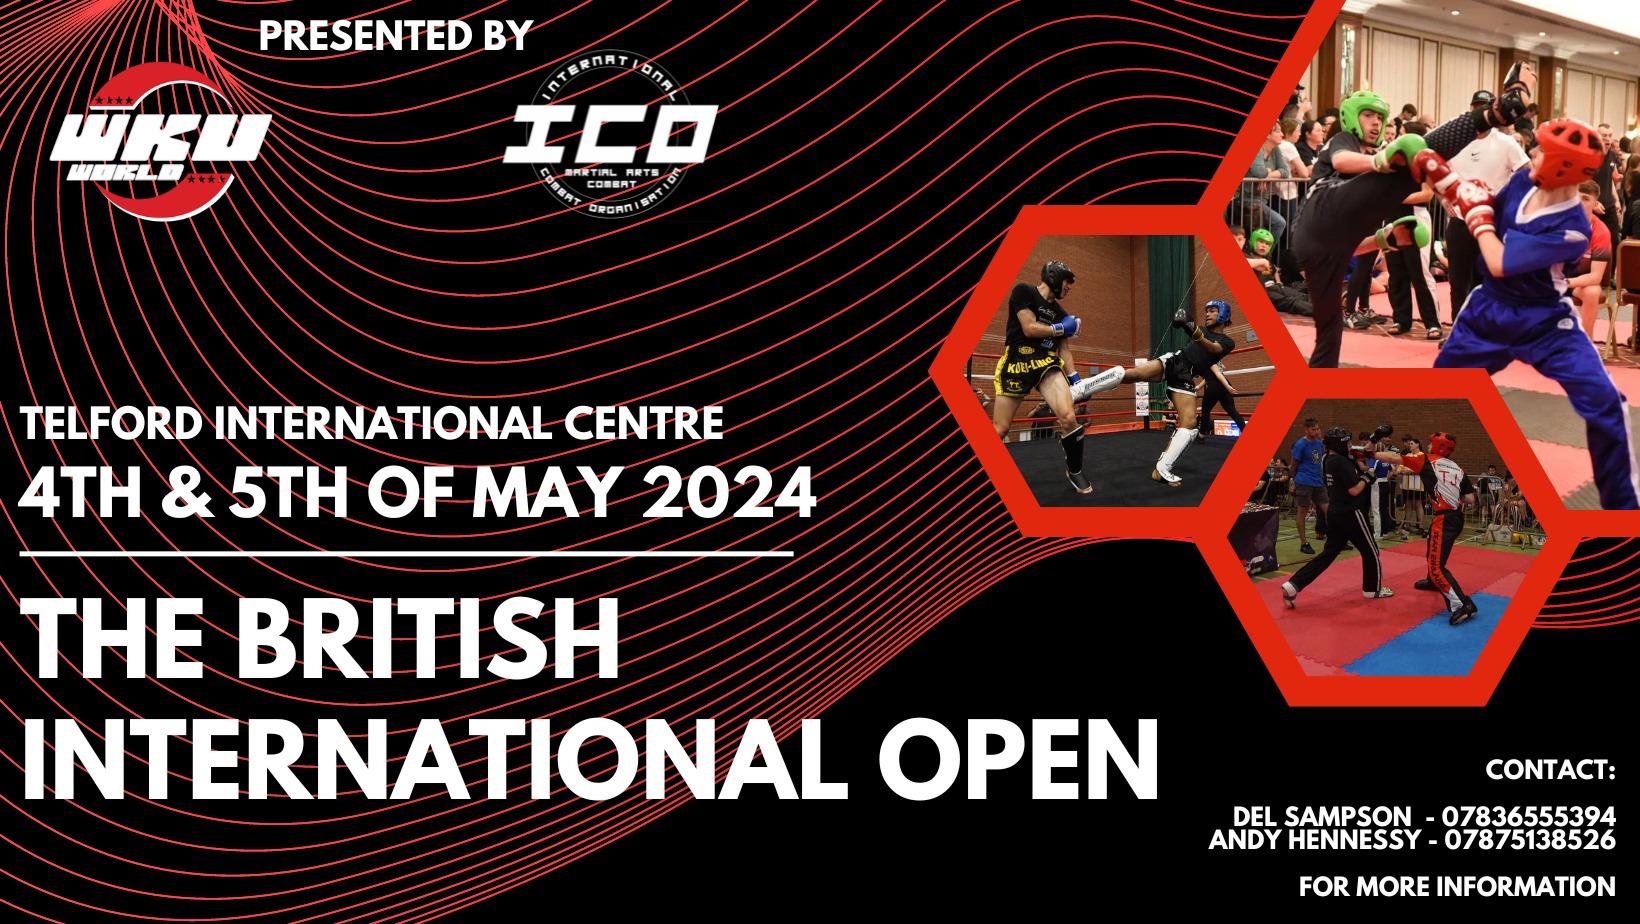 The British International Open